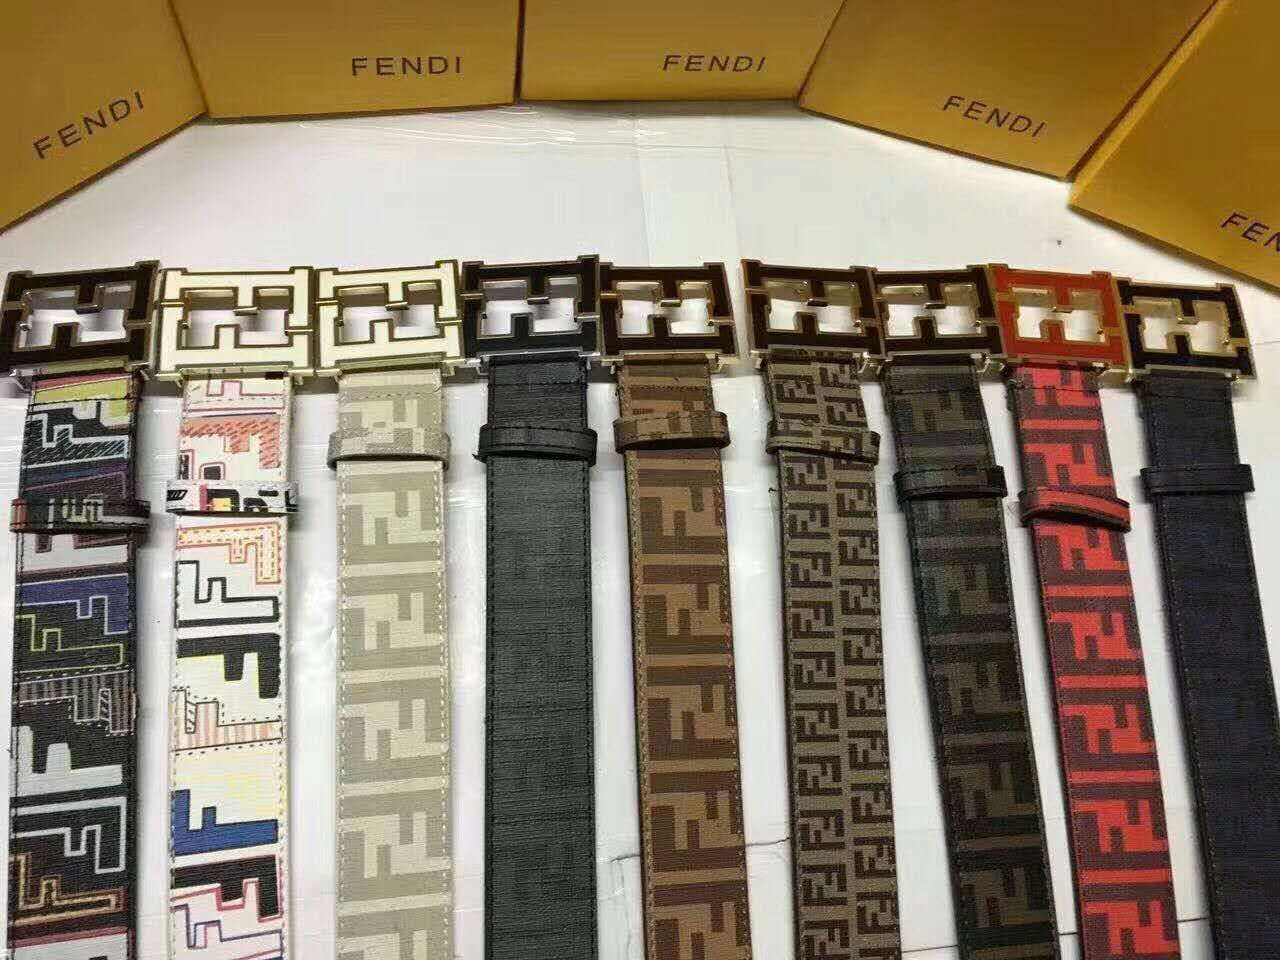 Wholesale&#13;FENDI&#13;1belt Men Women Leather Belts Soft Leather Belt Quality Solid Metal Buckle Fashion Printing Luxury Belt B12 From Ceoox, $12.76 | DHgate.Com